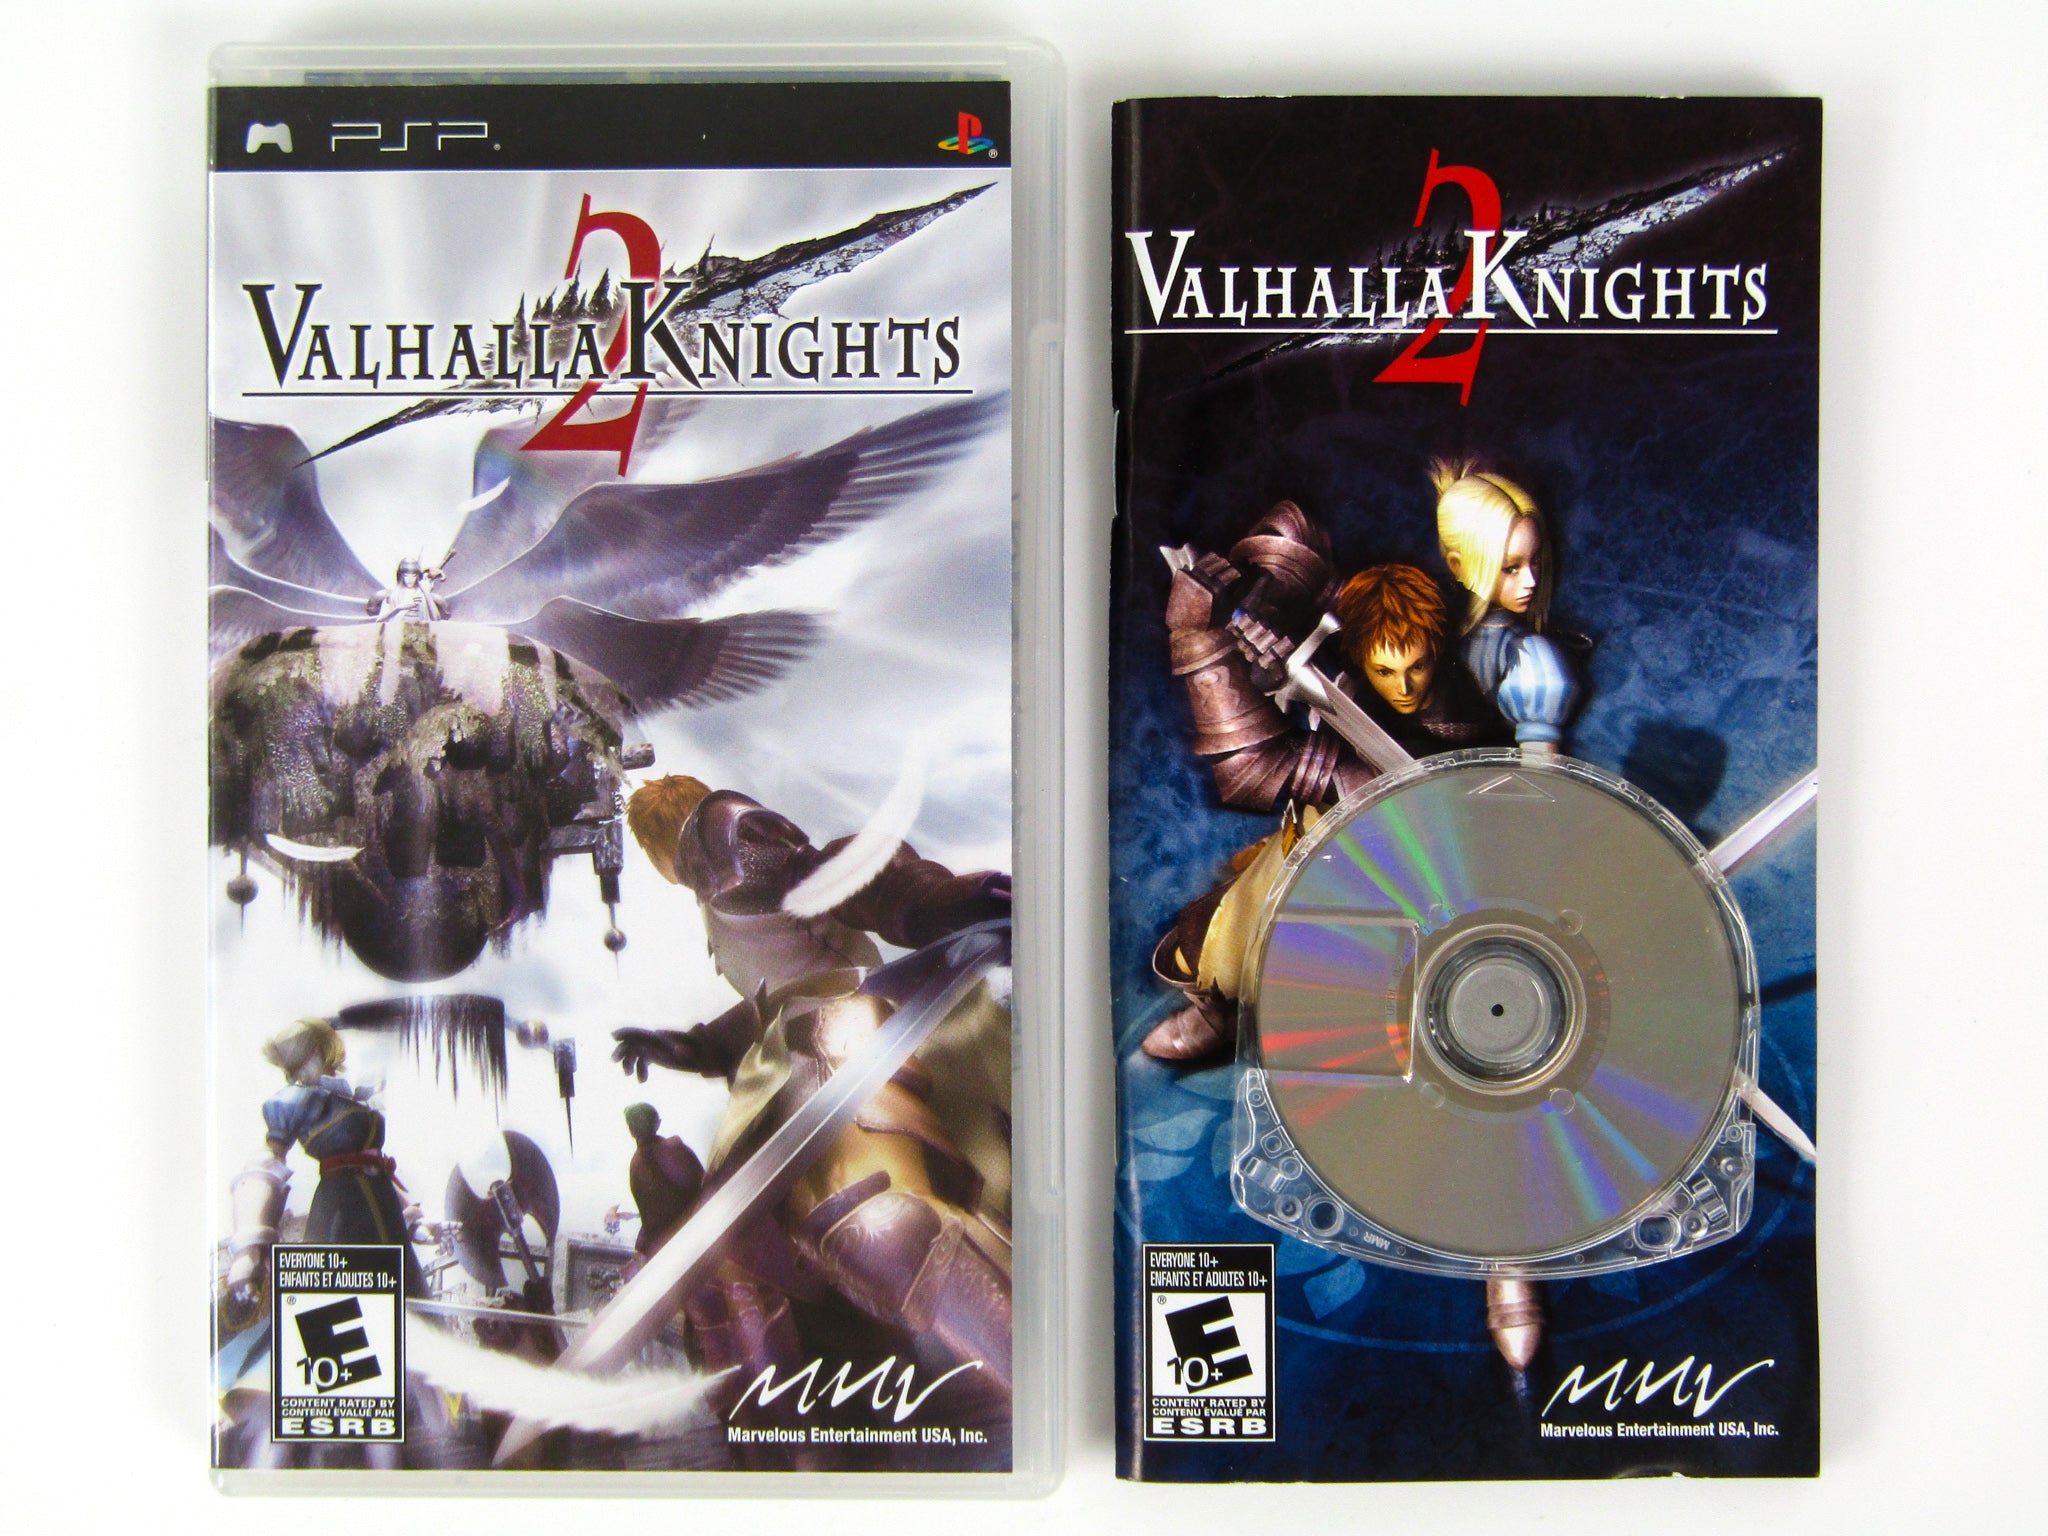 Valhalla Knights 2 rebalanced for North America - Siliconera